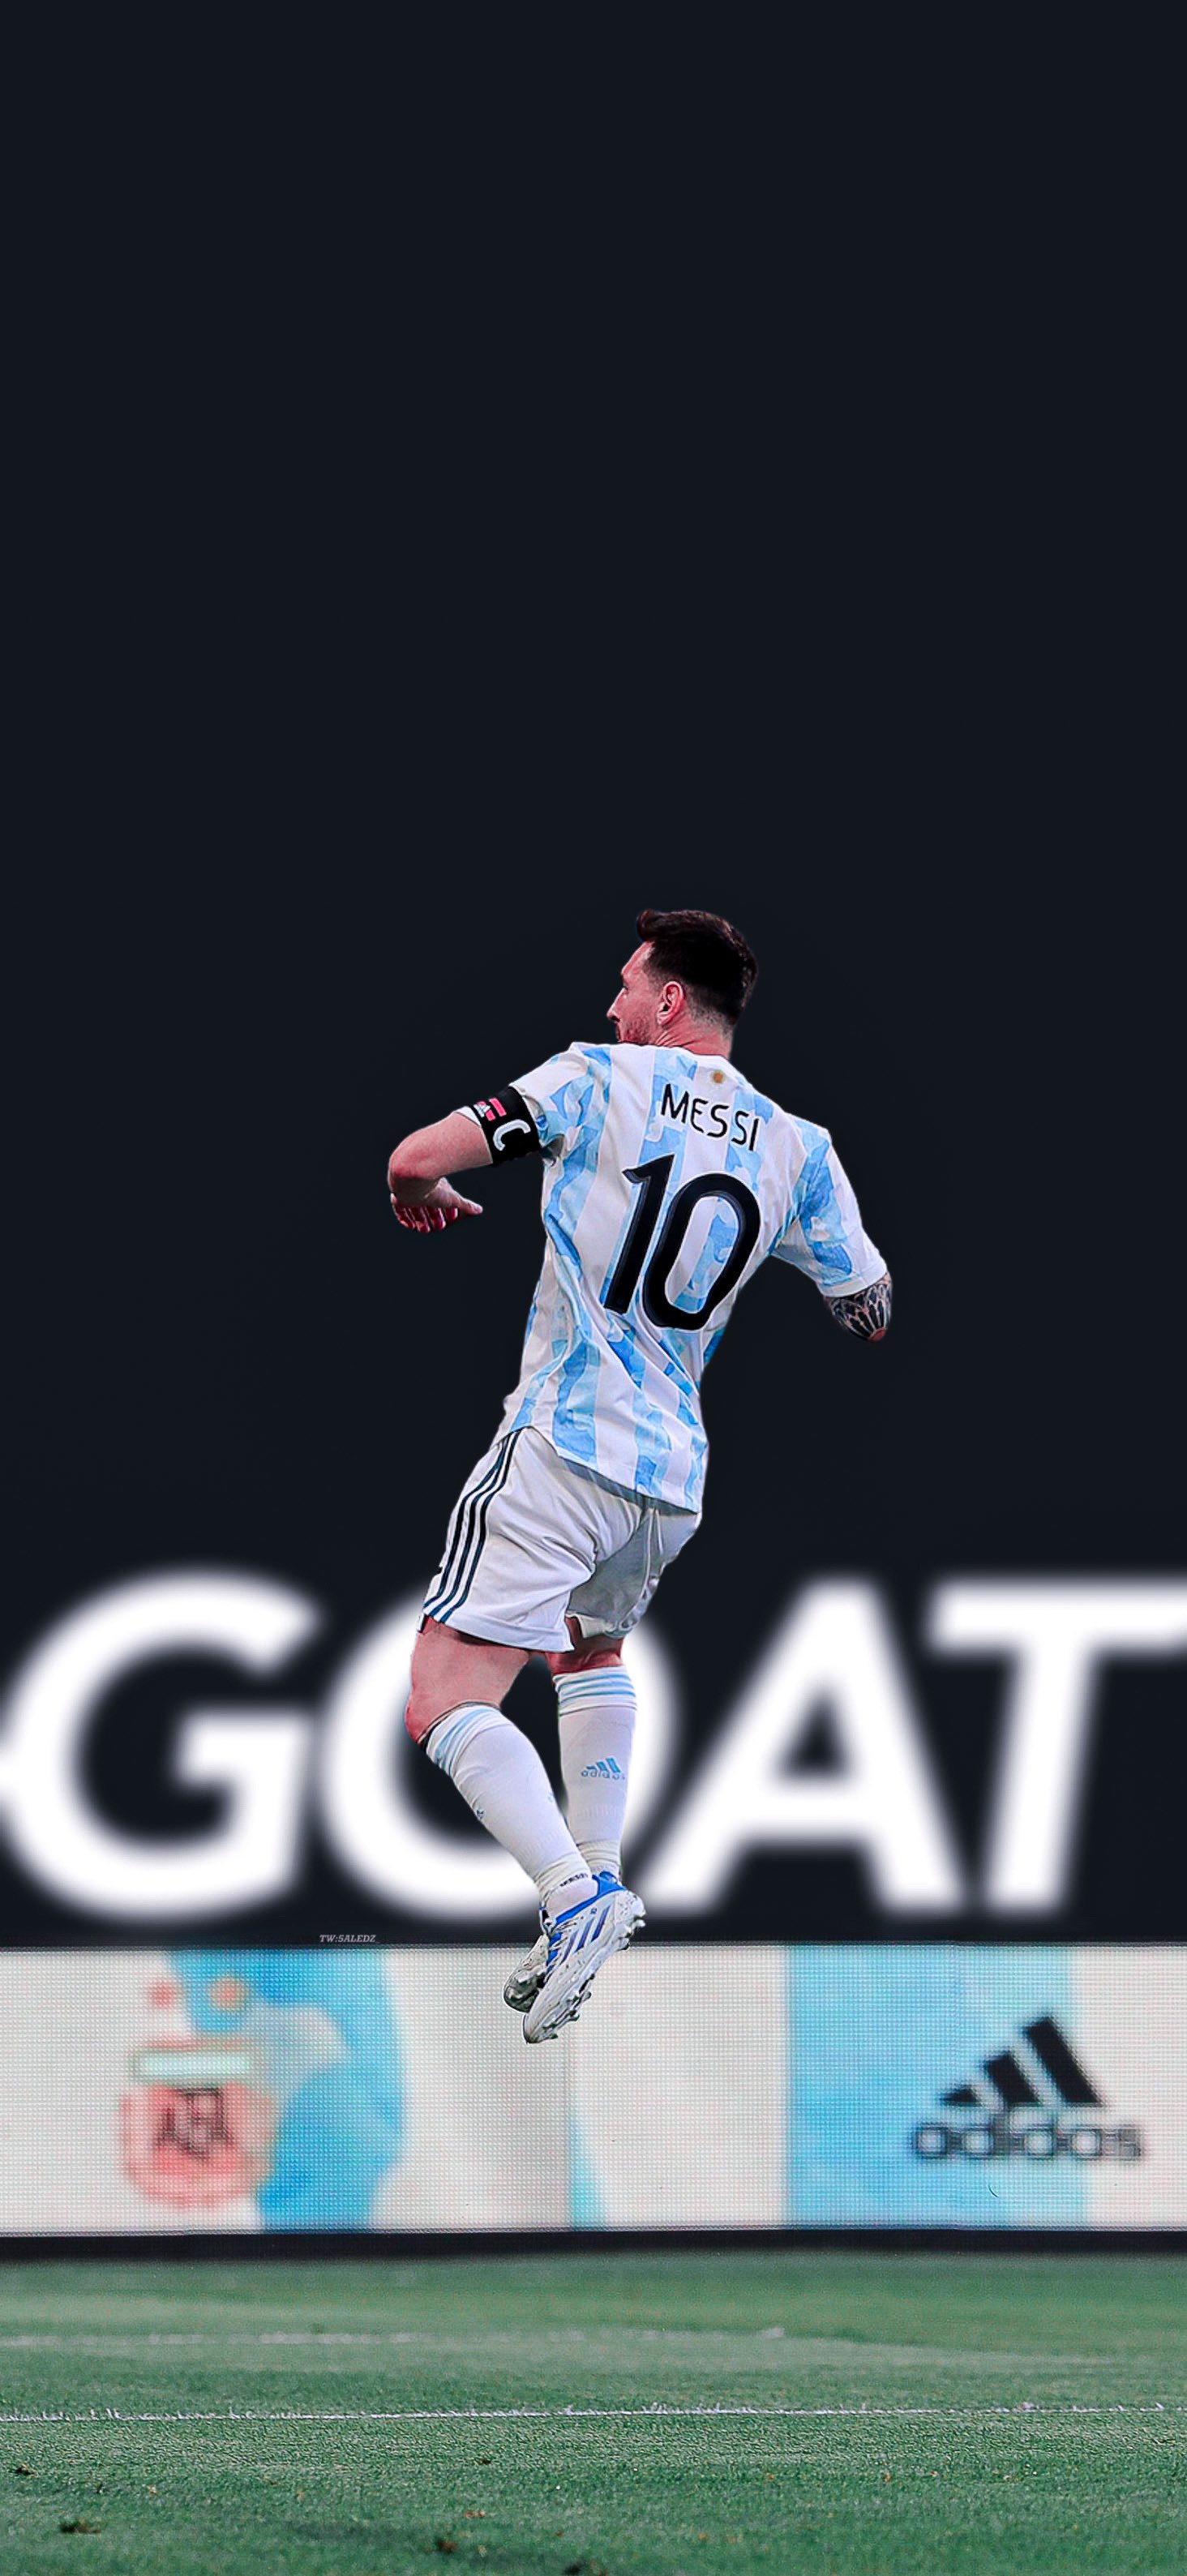 Messi Football King IPhone Wallpaper HD IPhone Wallpapers Wallpaper  Download  MOONAZ